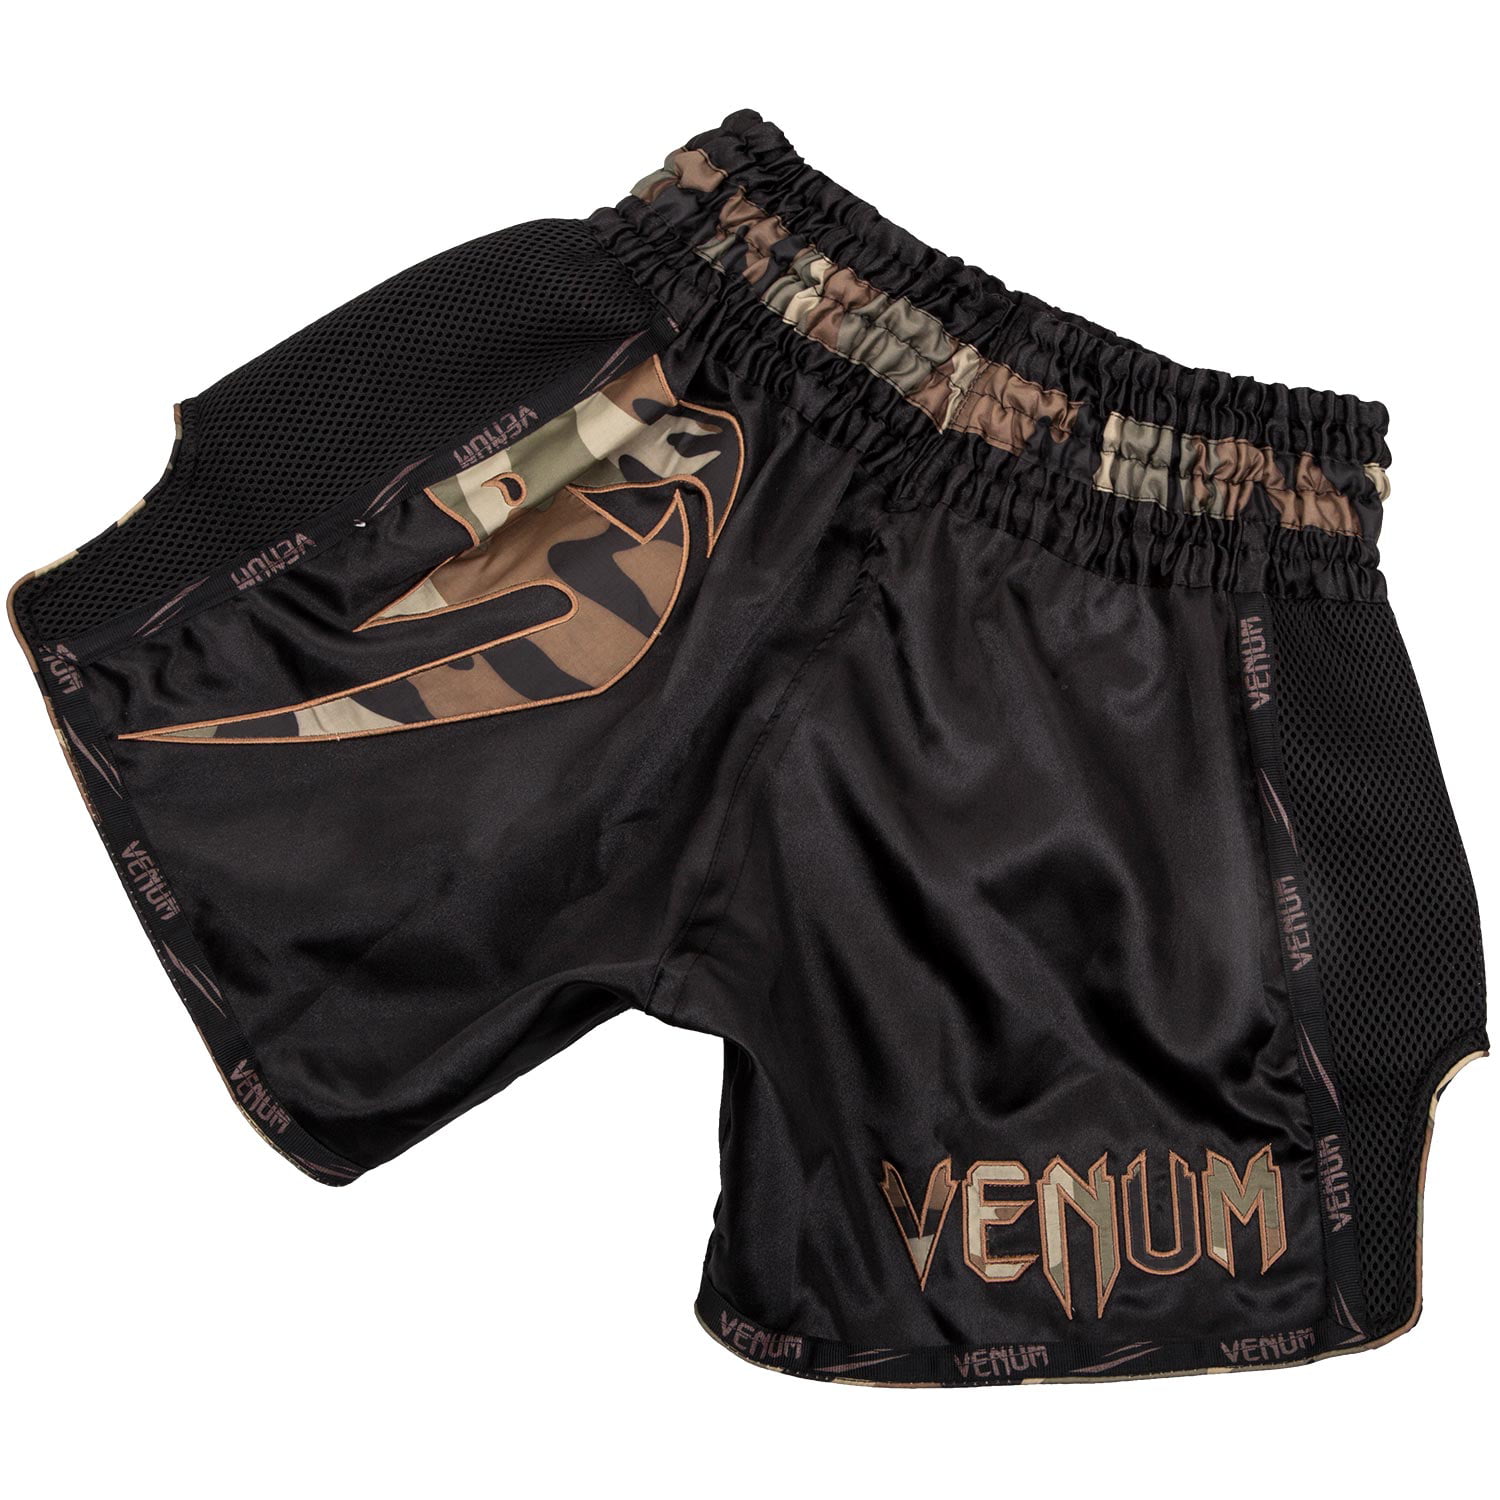 Black/Forest Camo Venum Giant Lightweight Muay Thai Shorts 